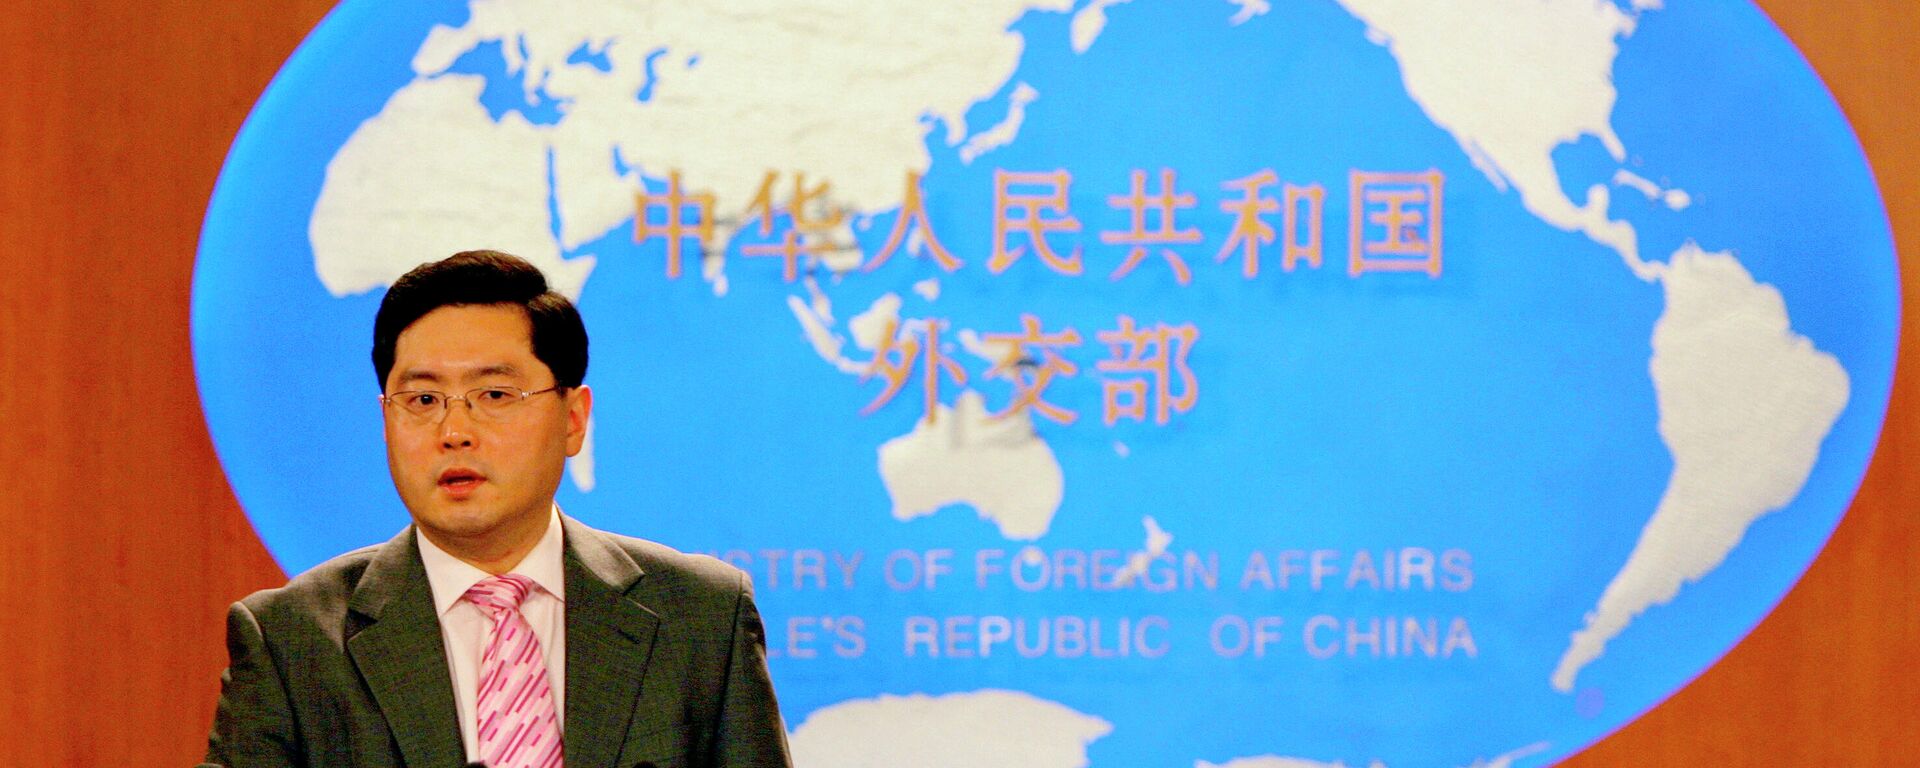 Chinese Foreign Ministry spokesman Qin Gang speaks at a media briefing in Beijing (File) - Sputnik International, 1920, 22.03.2022